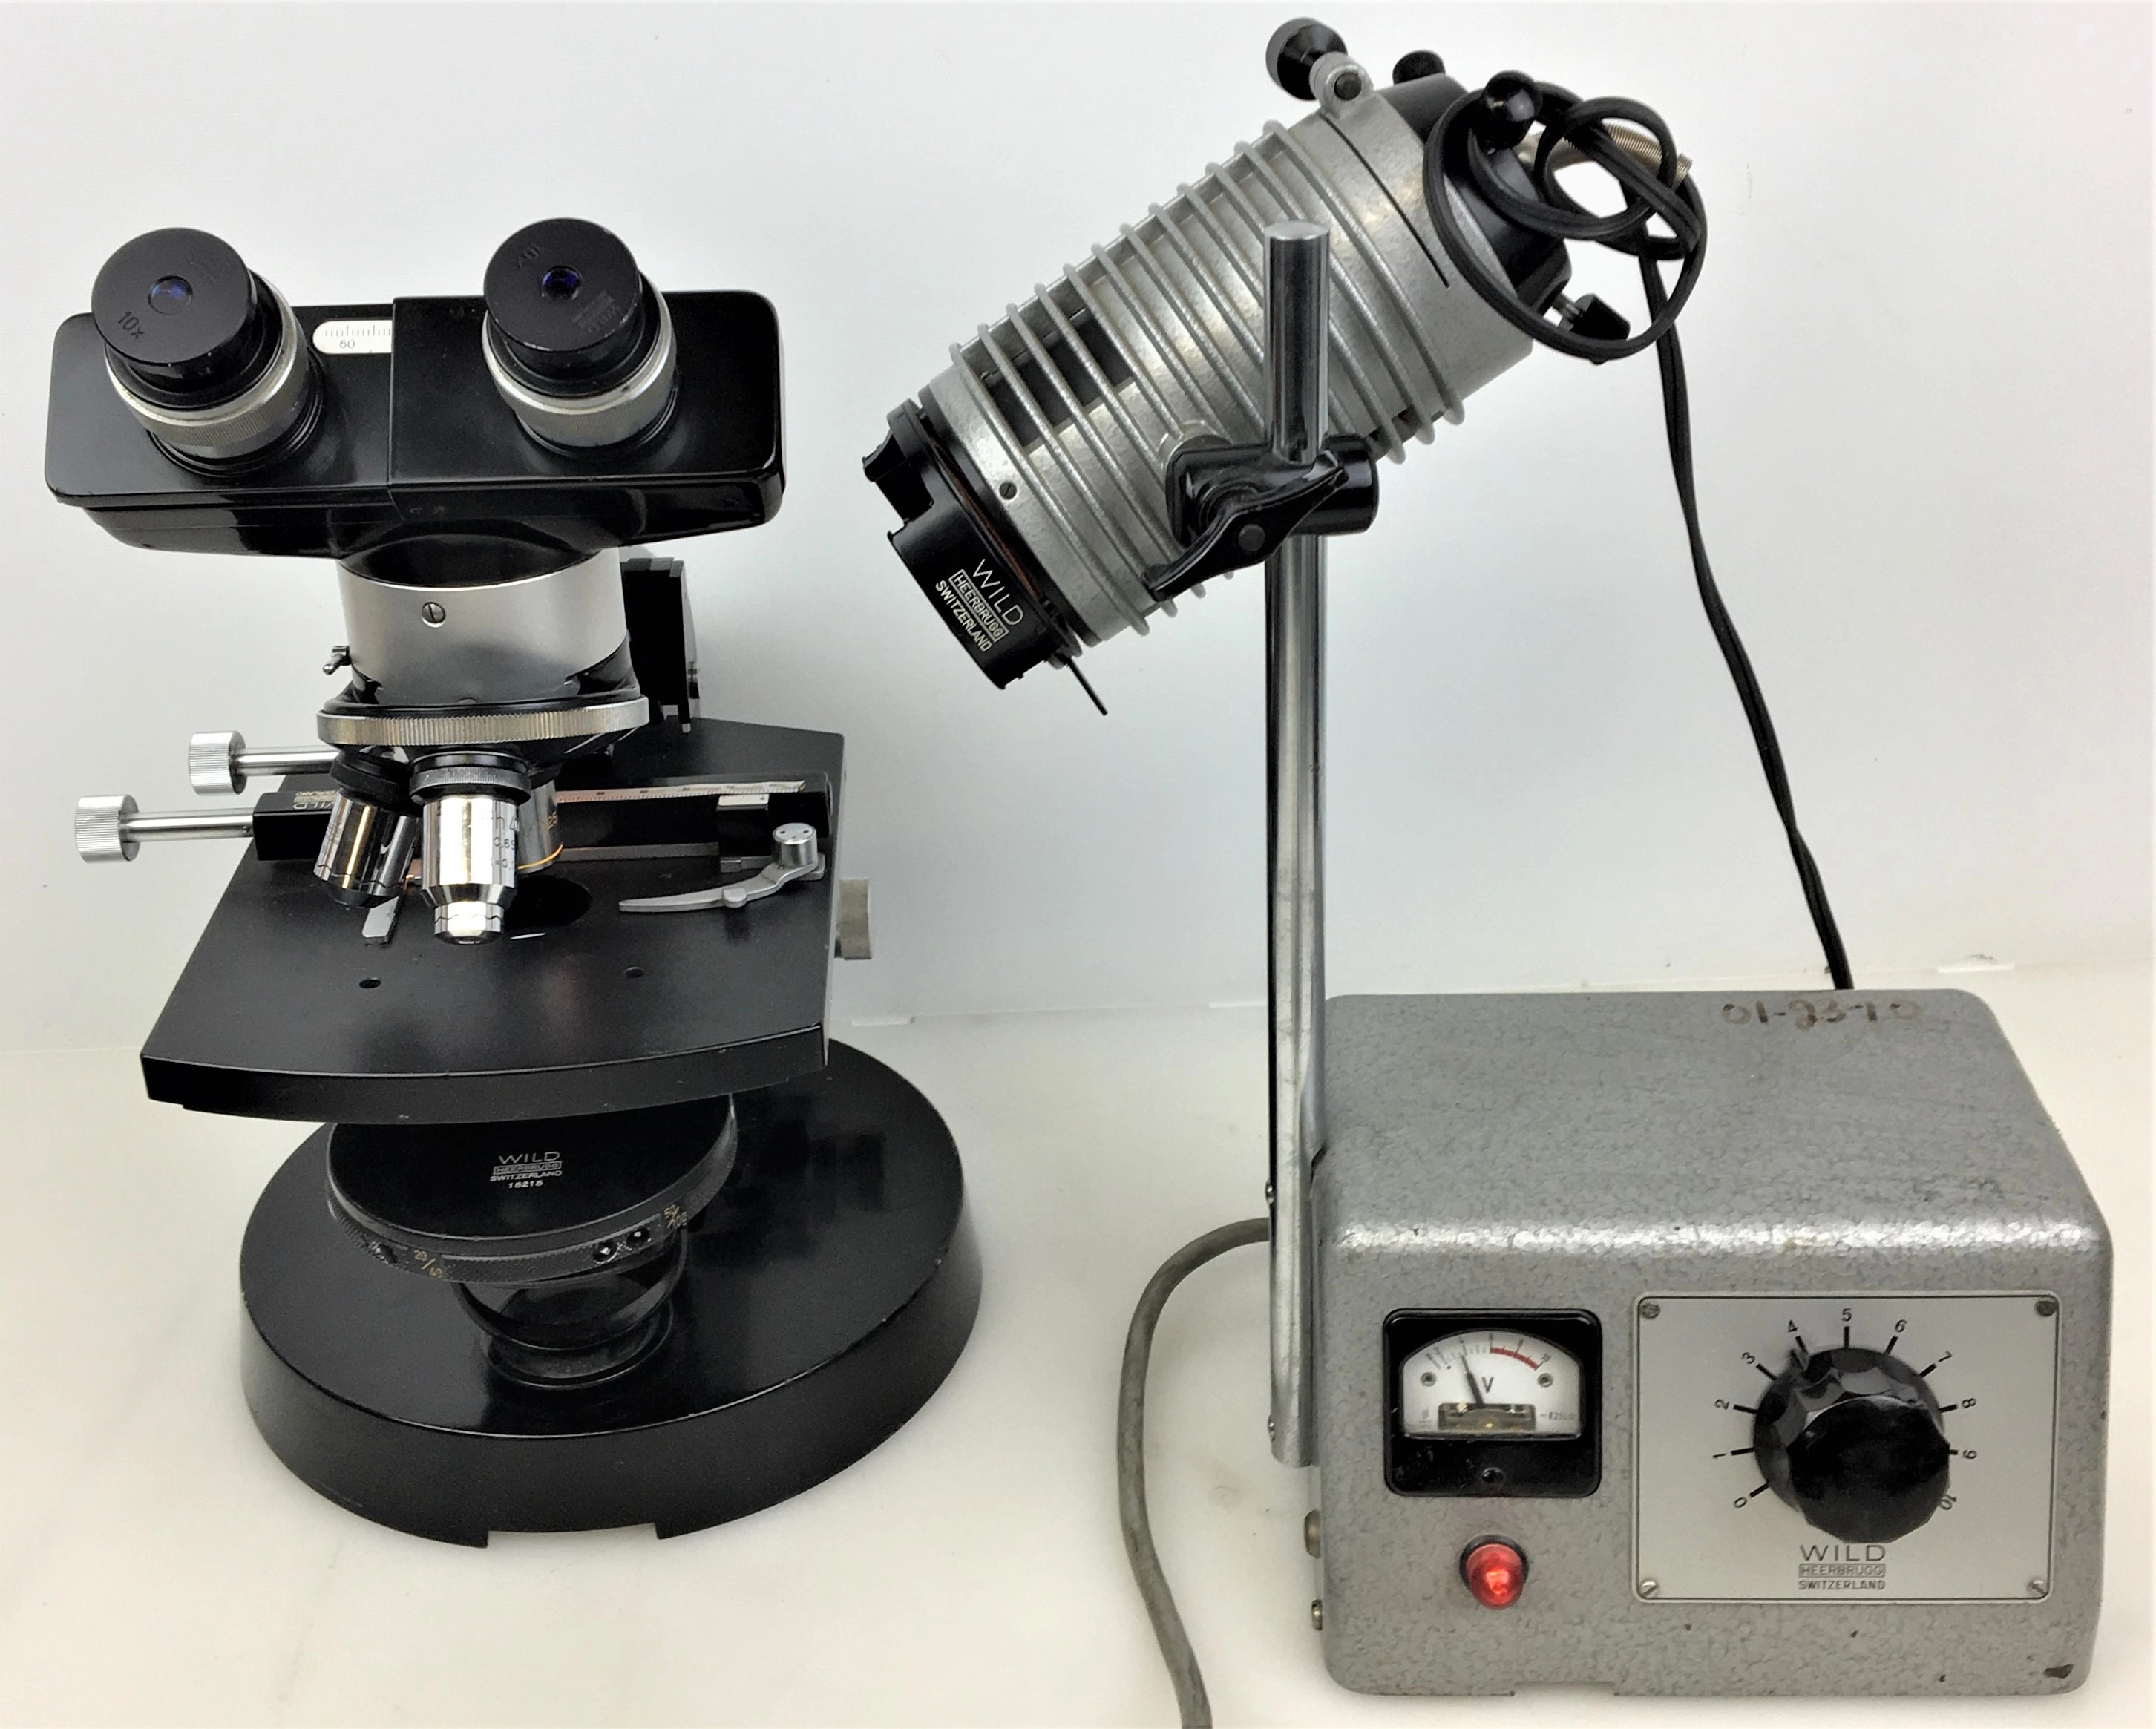 Wild M12 Binocular Phase-Contrast Microscope with Illuminator - 100X to 400X